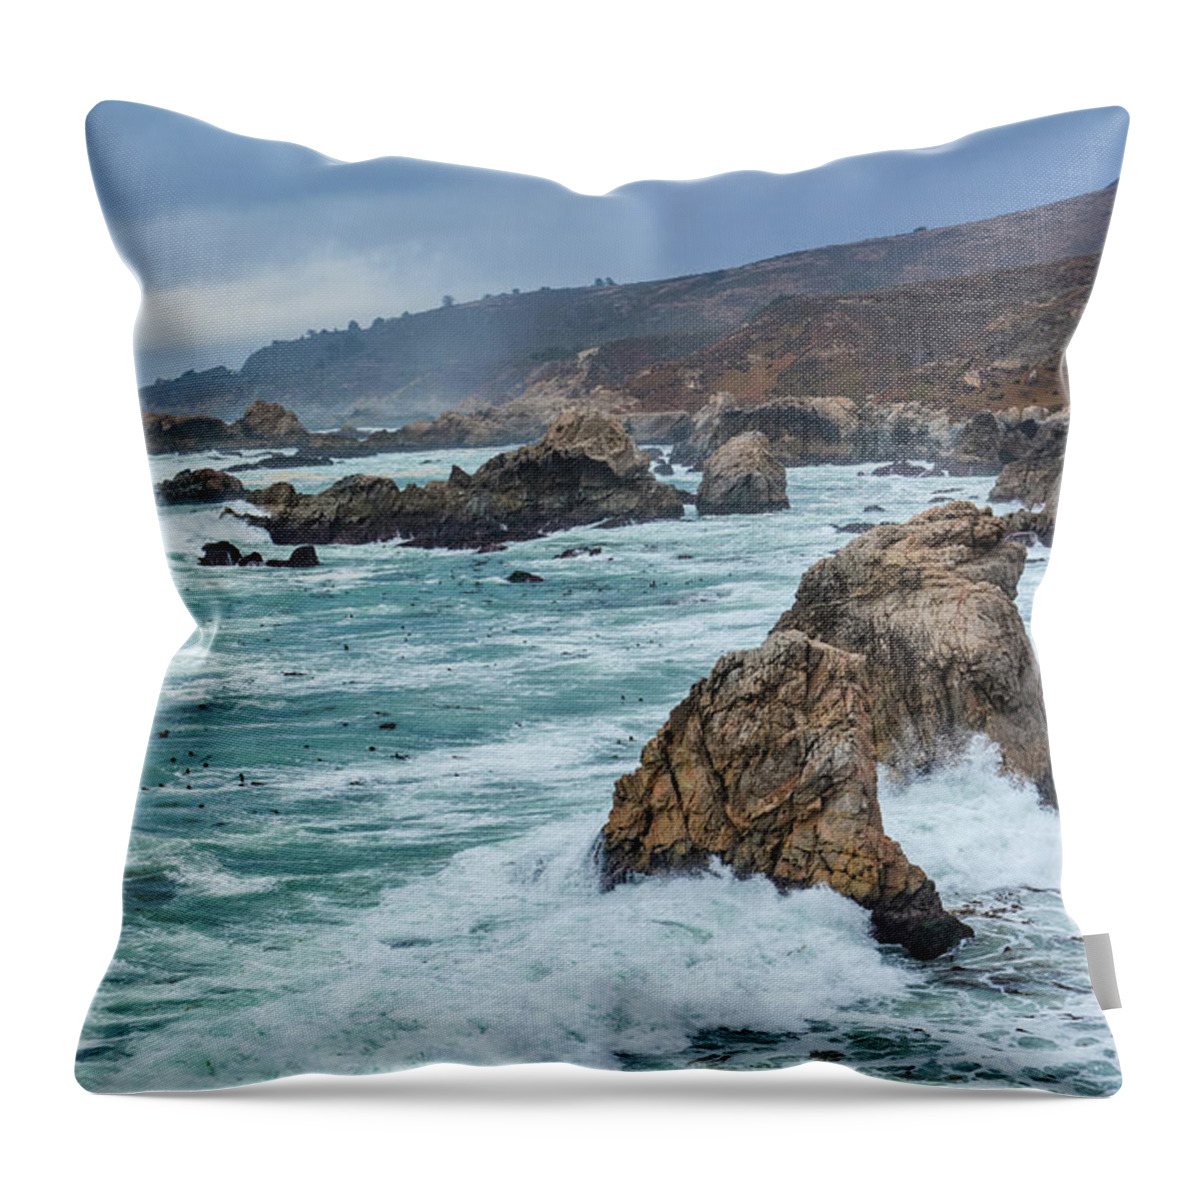 Big Sur Throw Pillow featuring the photograph Garrapata Central Coast by Kyle Hanson